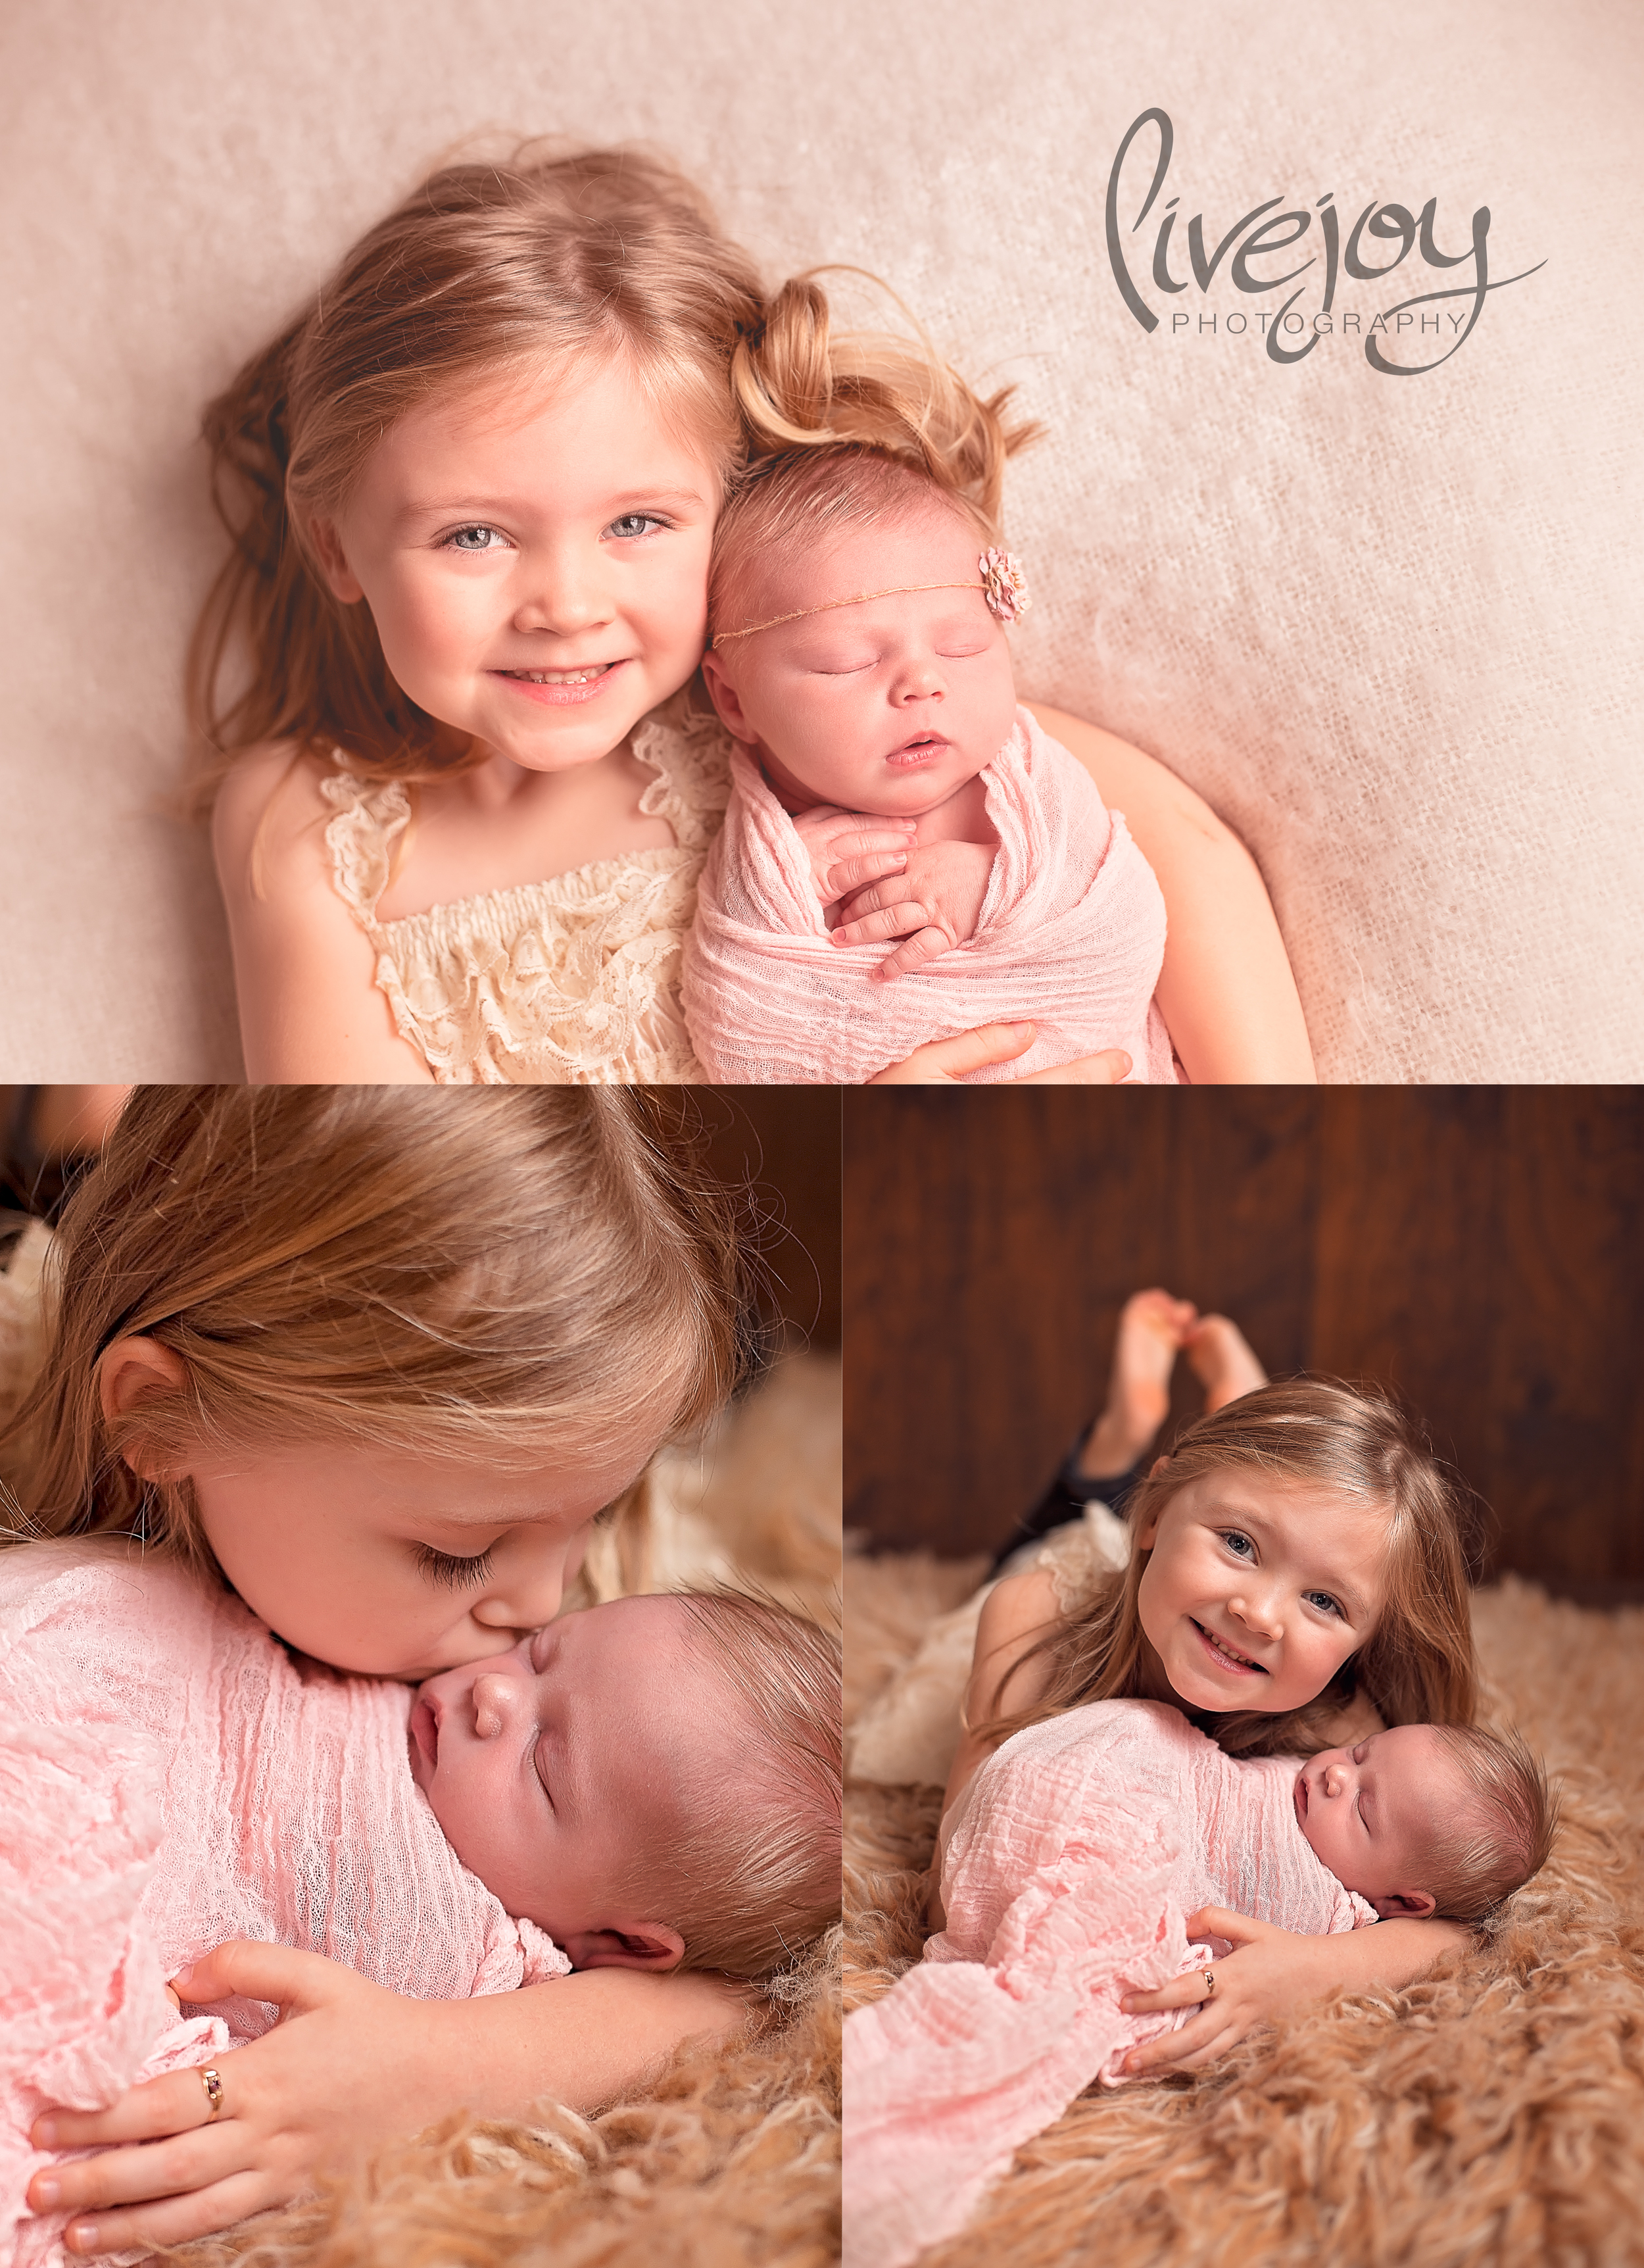 Sibling Newborn Photography | Oregon | LiveJoy Photography